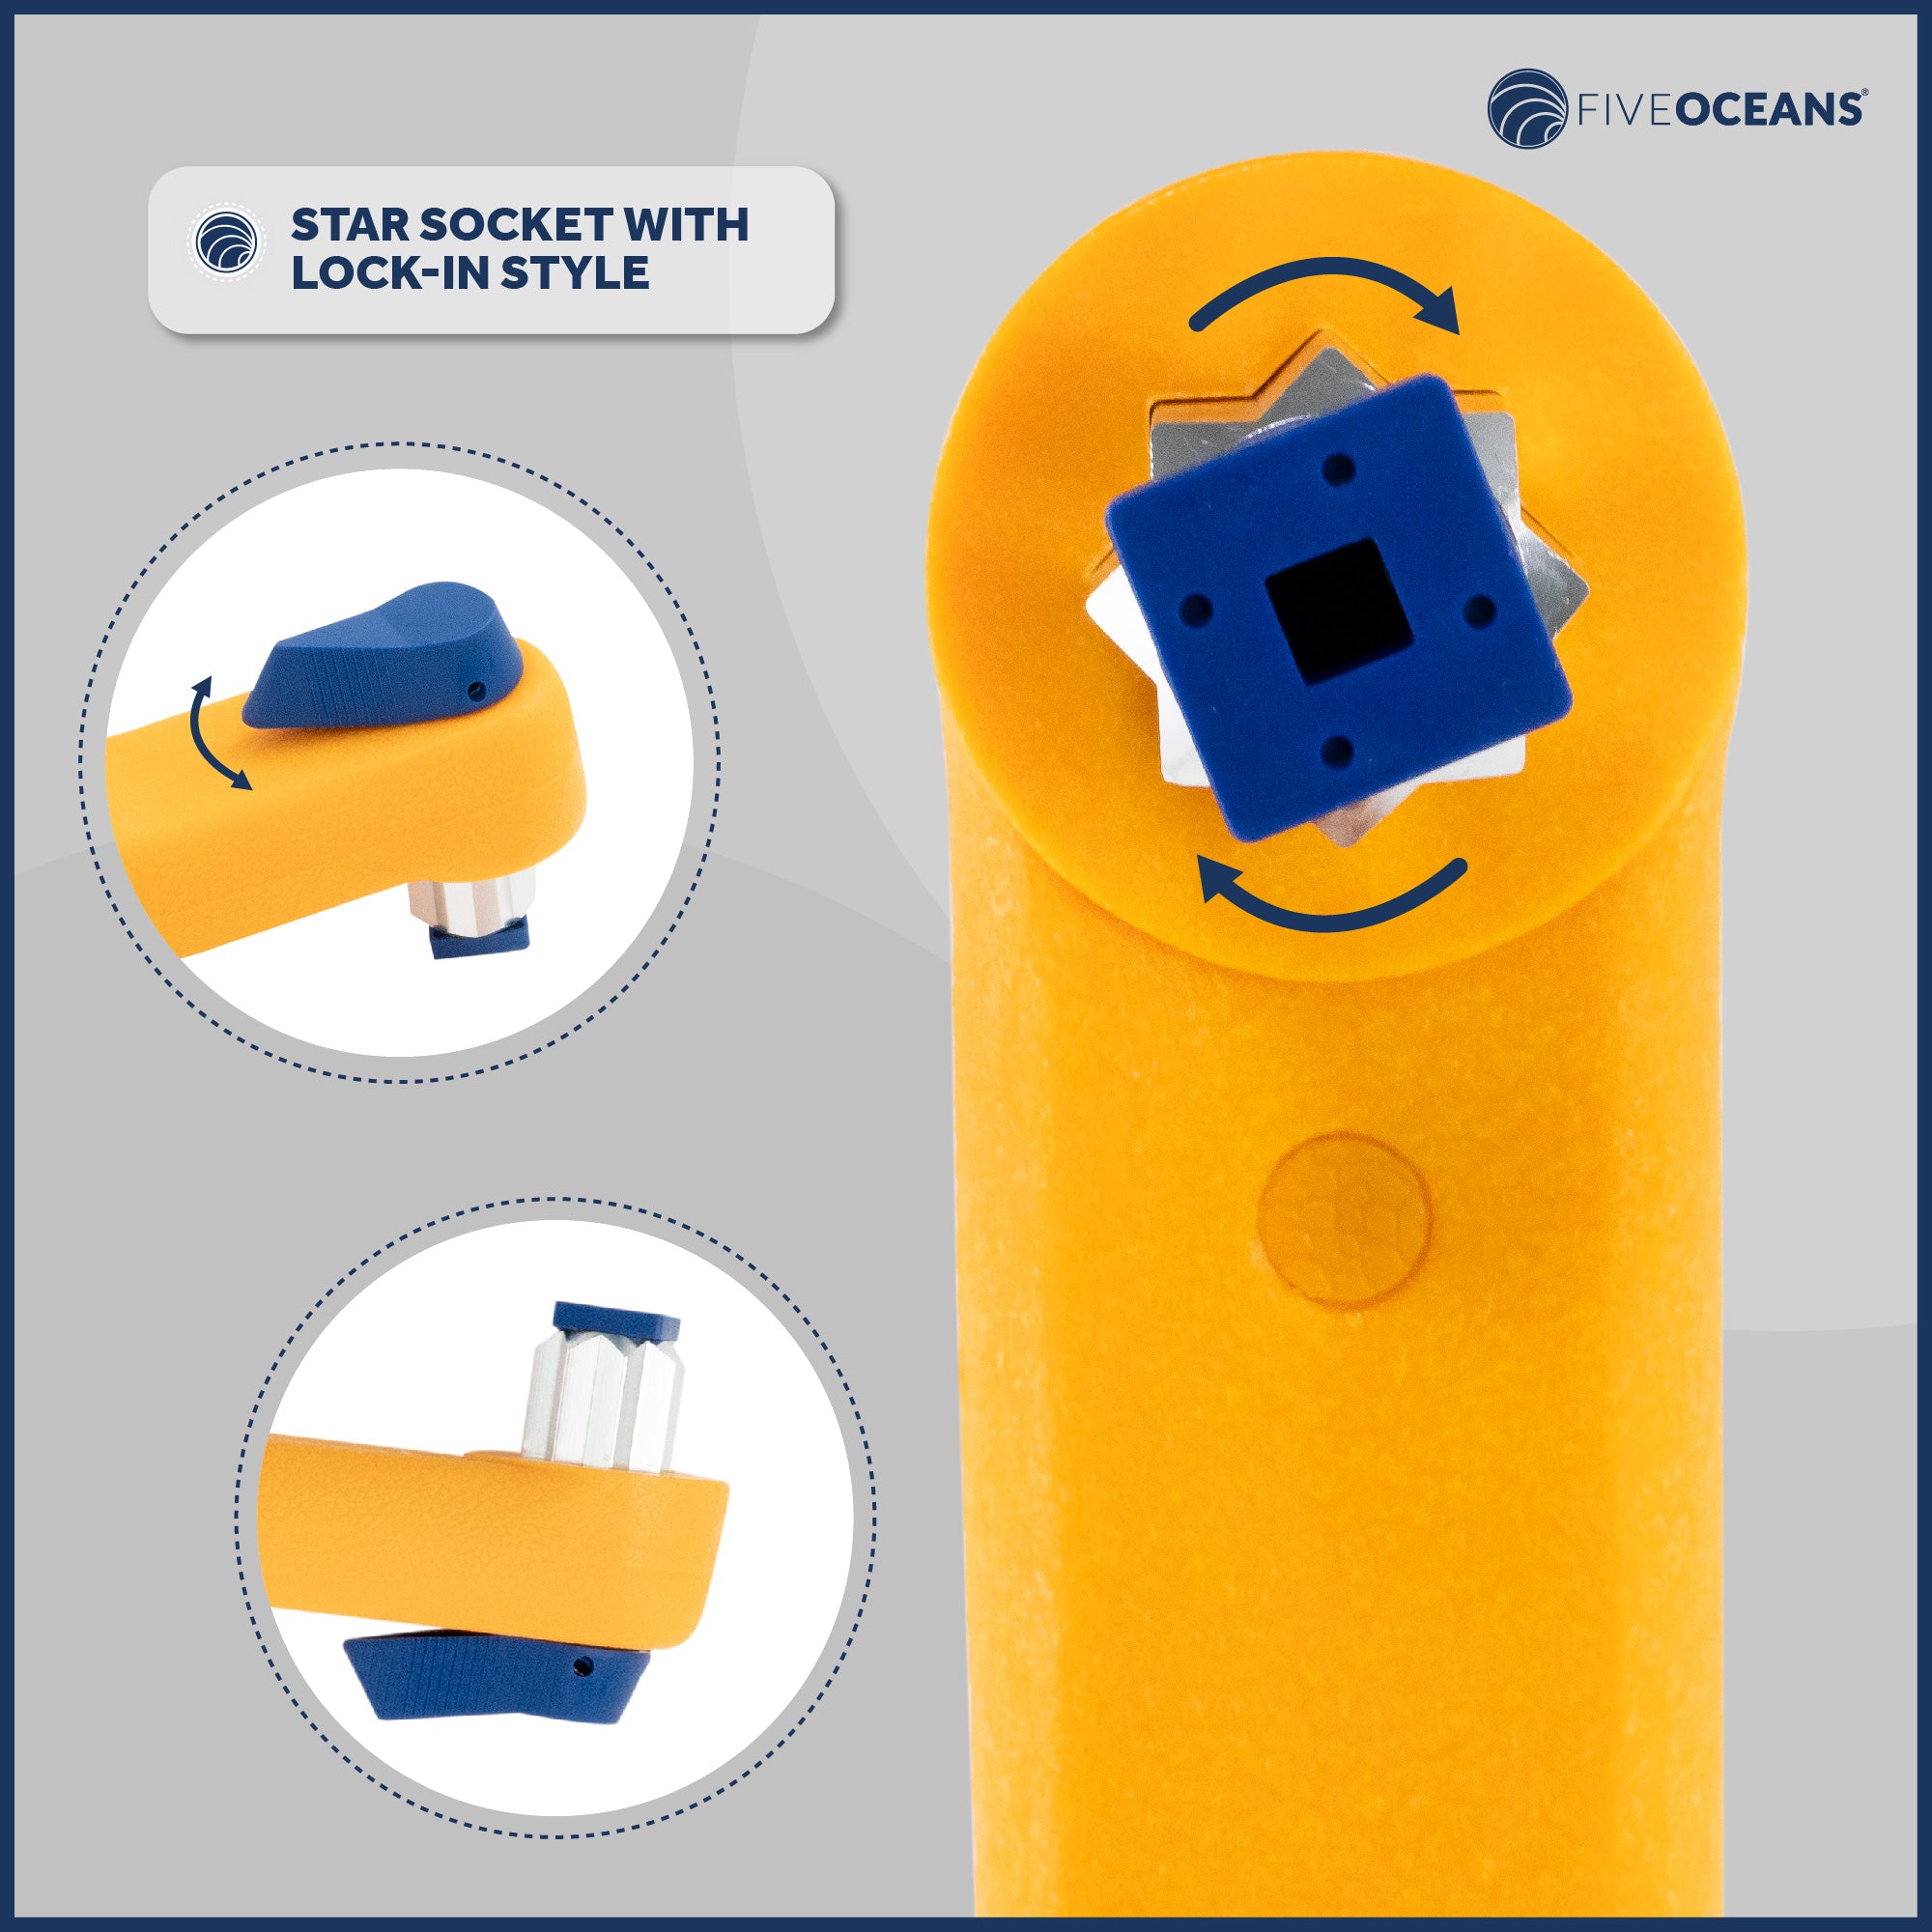 8" Sailboat Winch Handle, Universal Floating Lock-in Mechanism, Orange/Blue - FO86